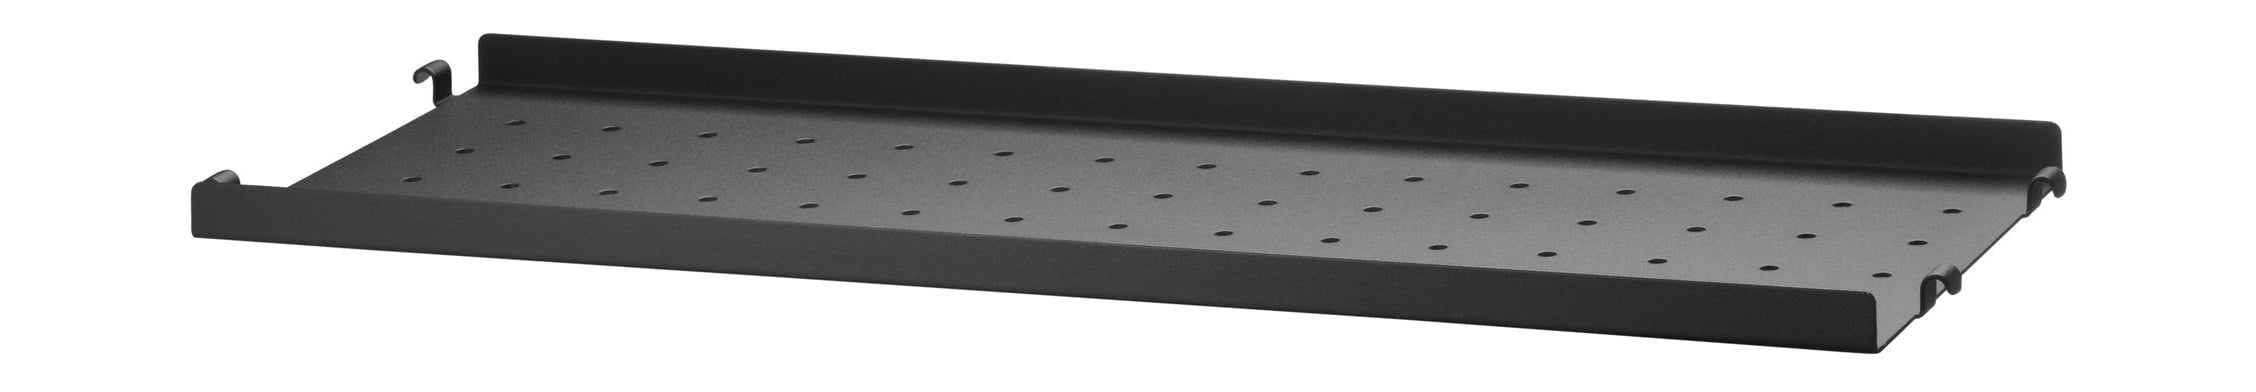 Strengmøbler Strengsystem Metalhylde med lav kant 20x58 cm, sort